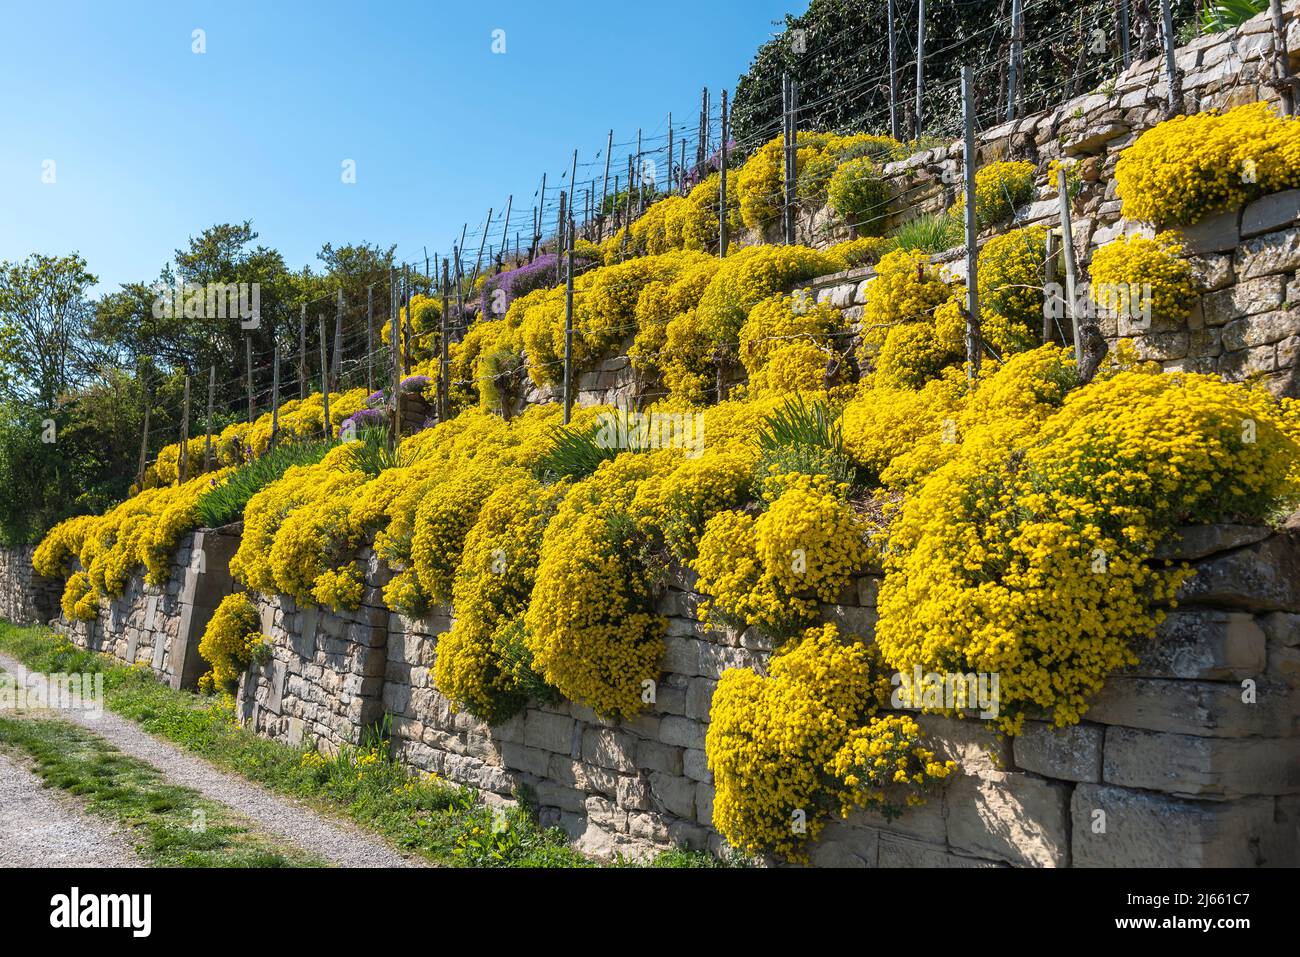 Flower matts of Wall stonewort on the vineyard path Enzfelsen, Muhlhausen on the Enz, Kraichgau, Germany, Europe Stock Photo